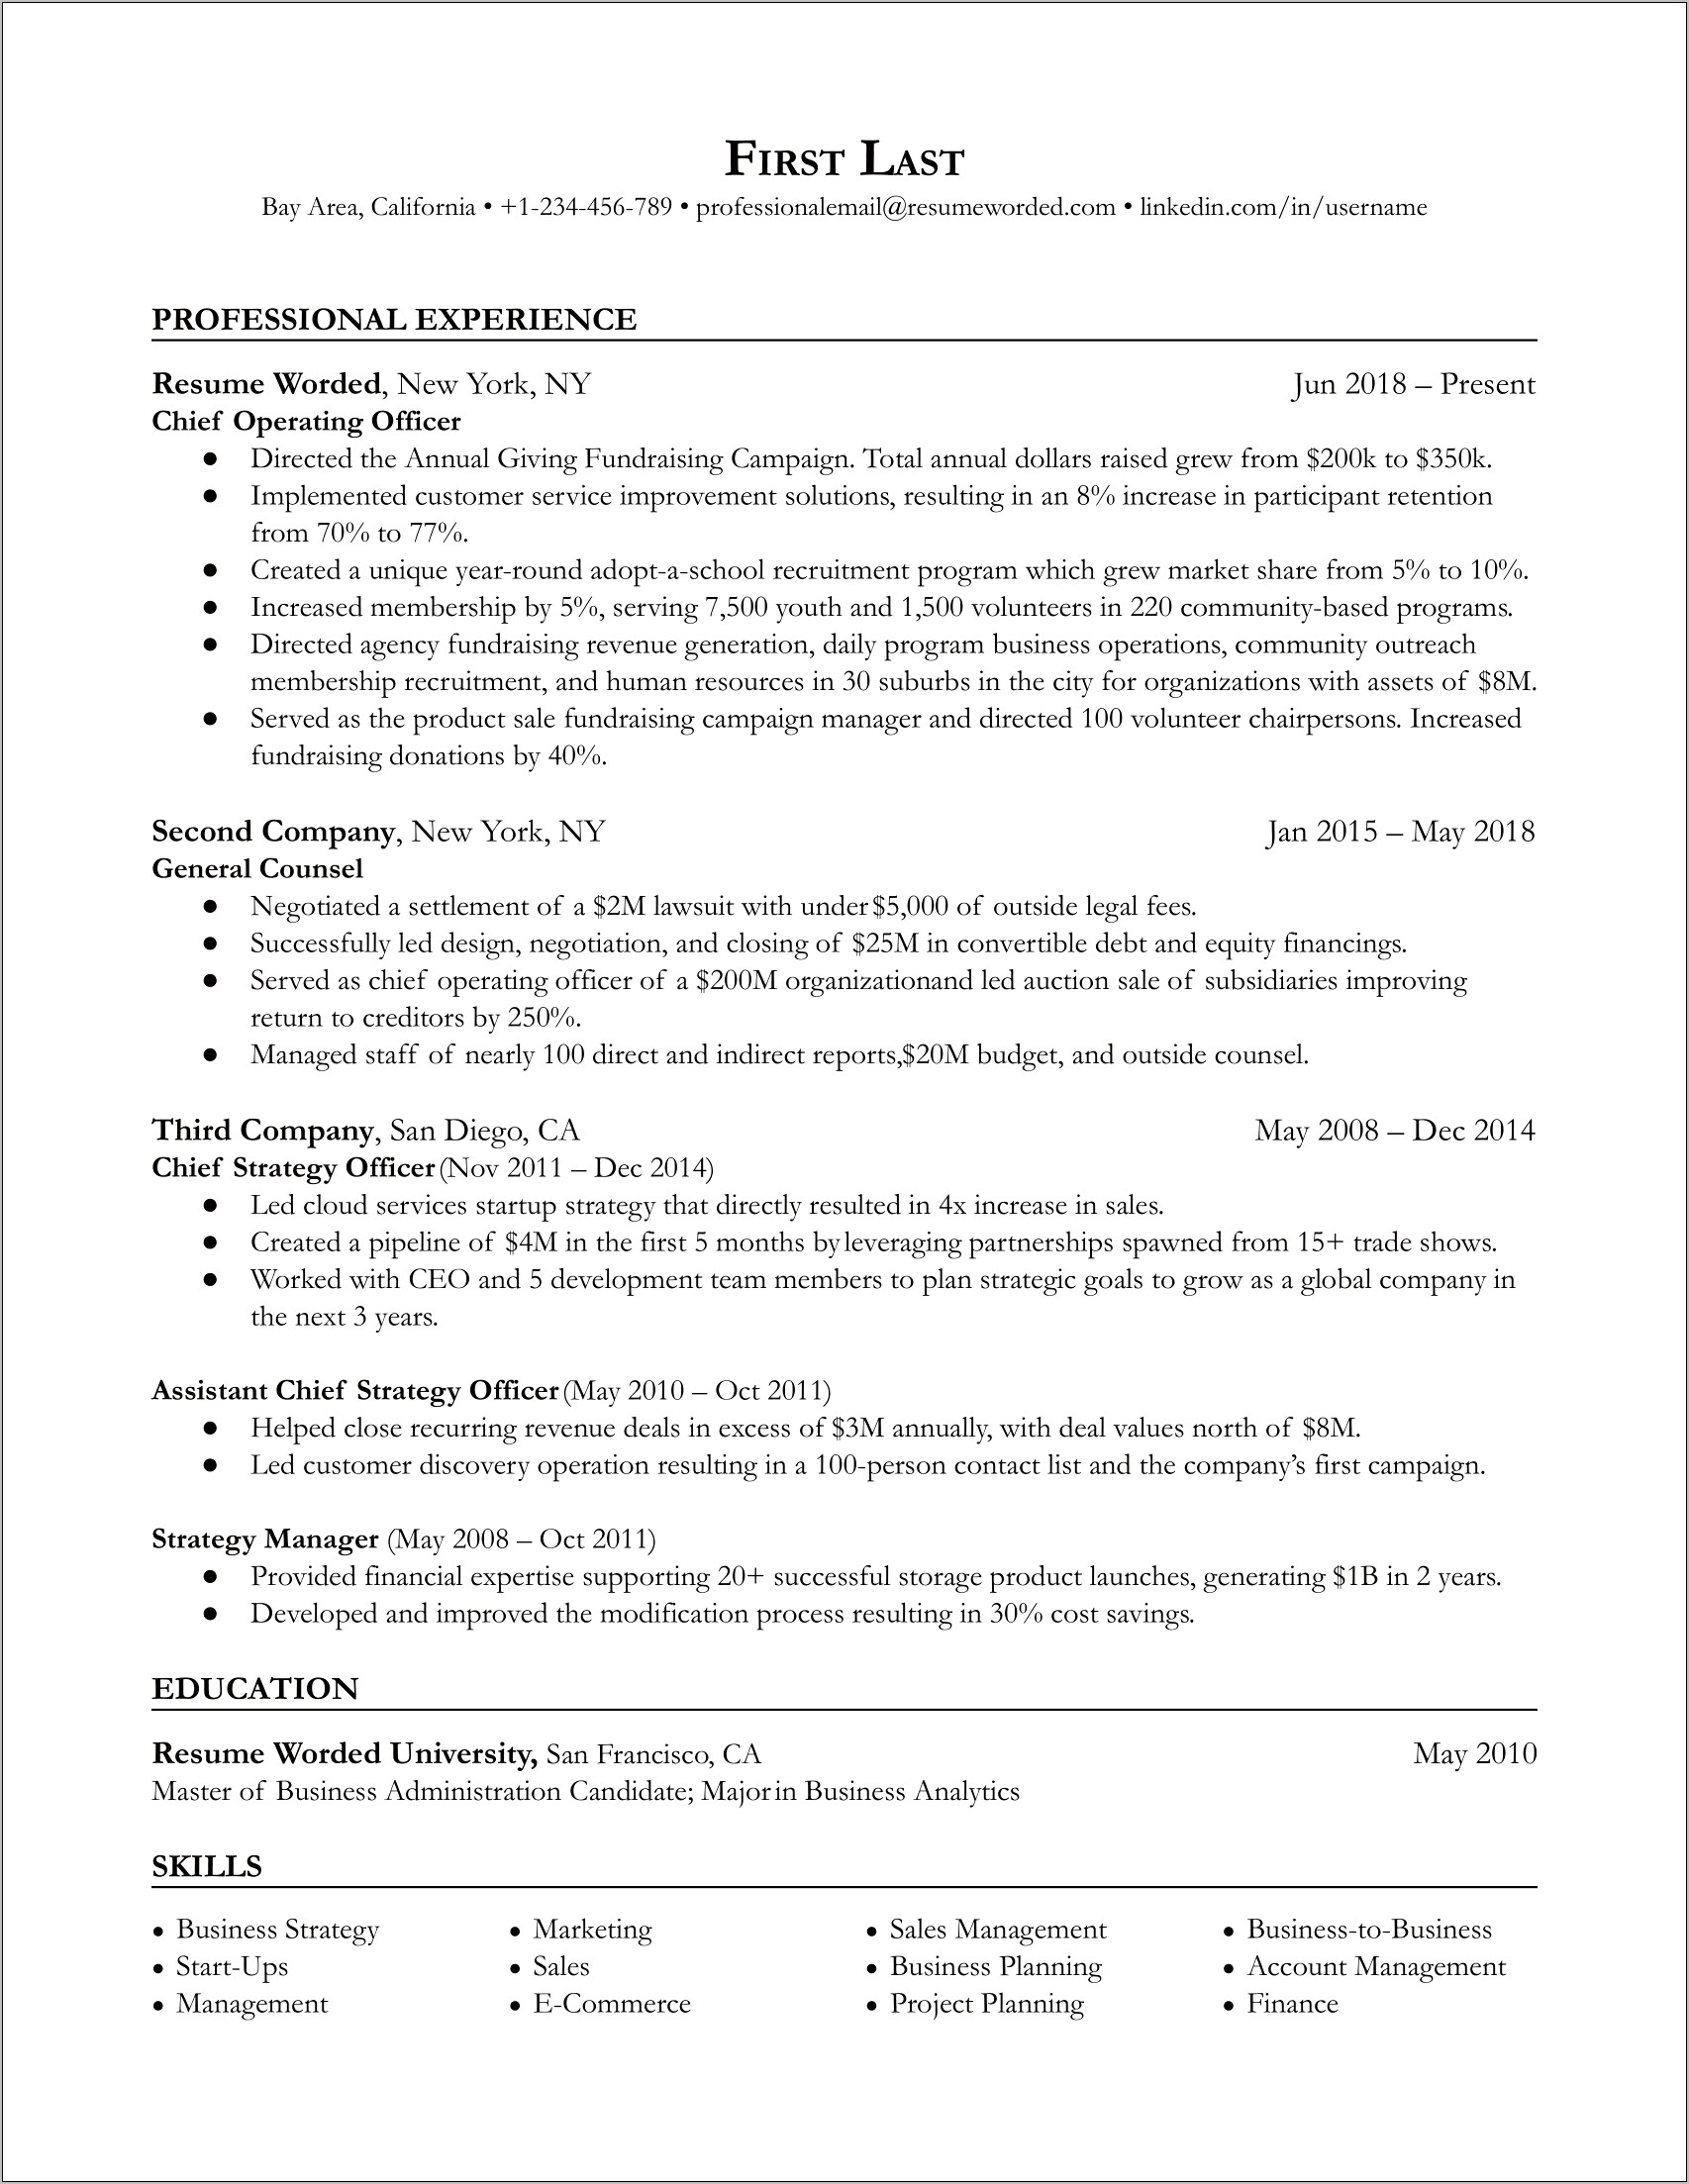 Listing Transferable Skills On Resume